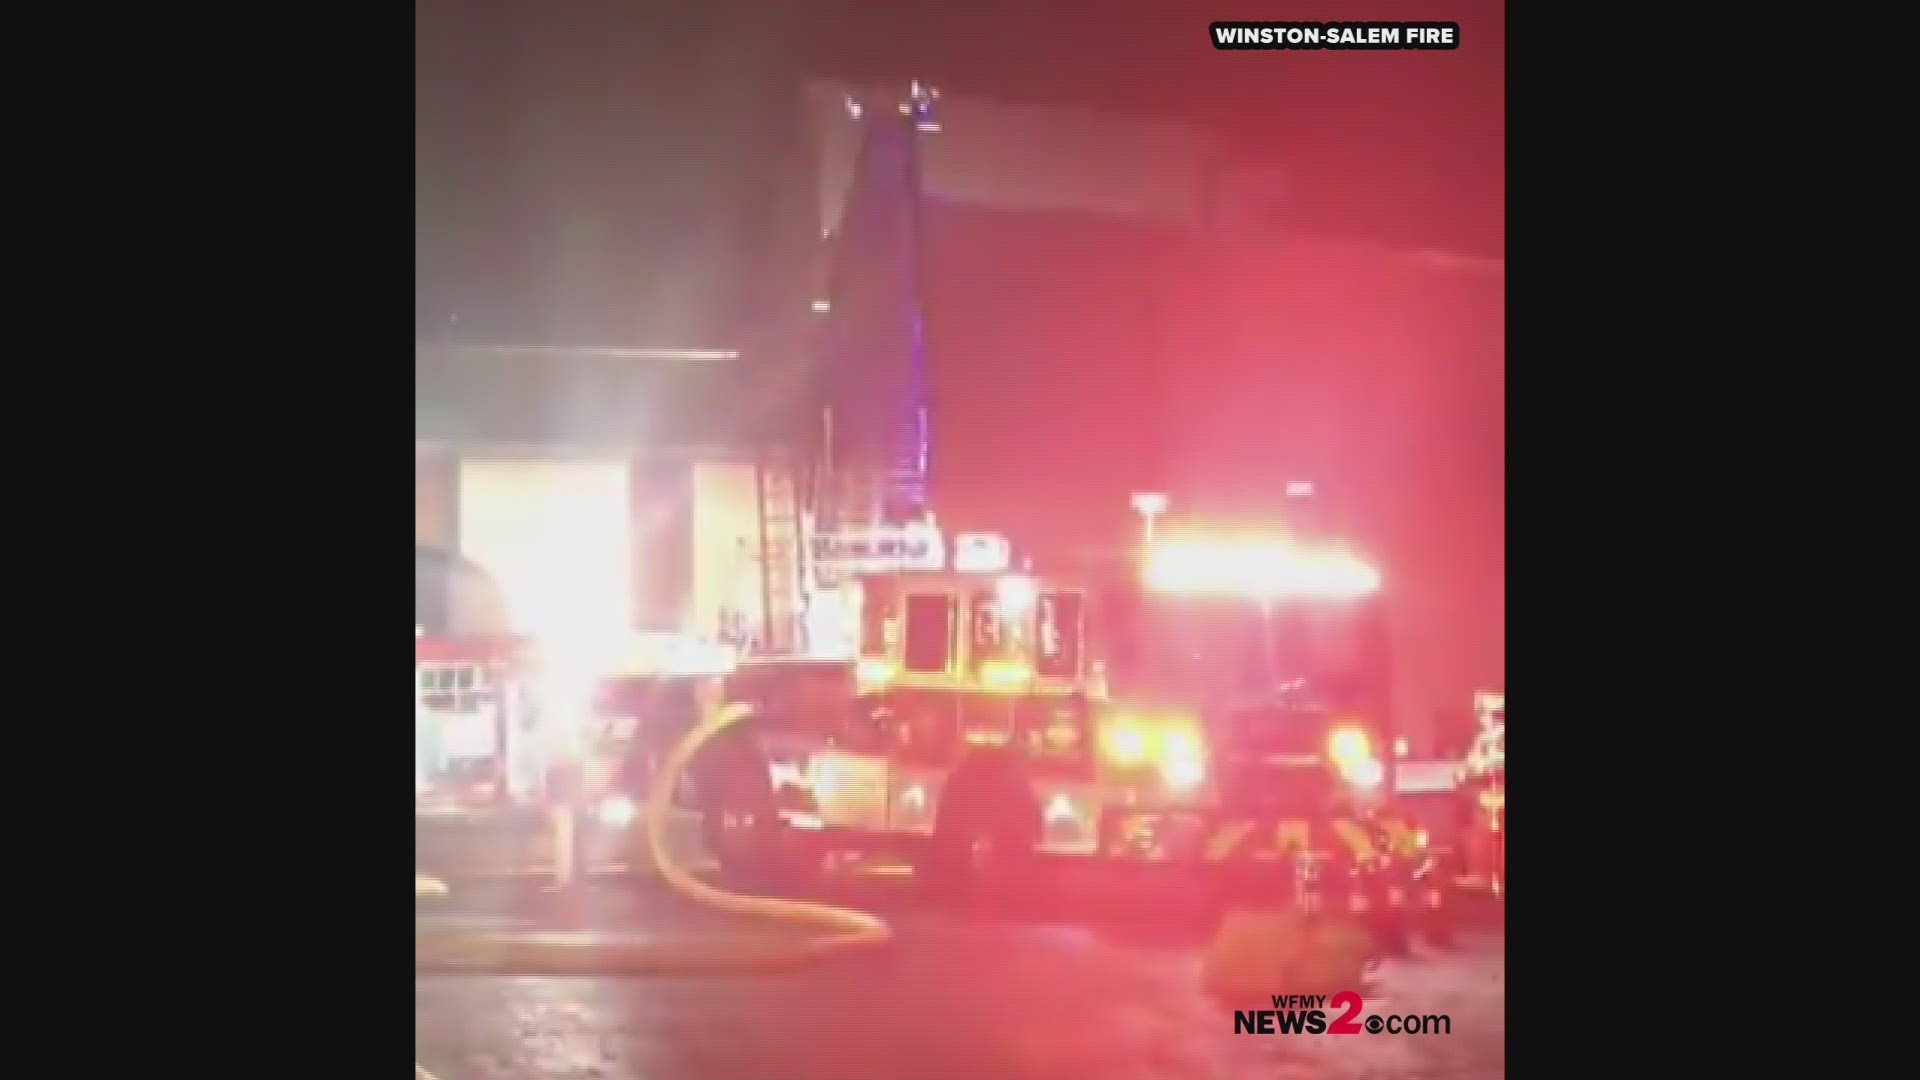 Fire officials say no one got hurt.